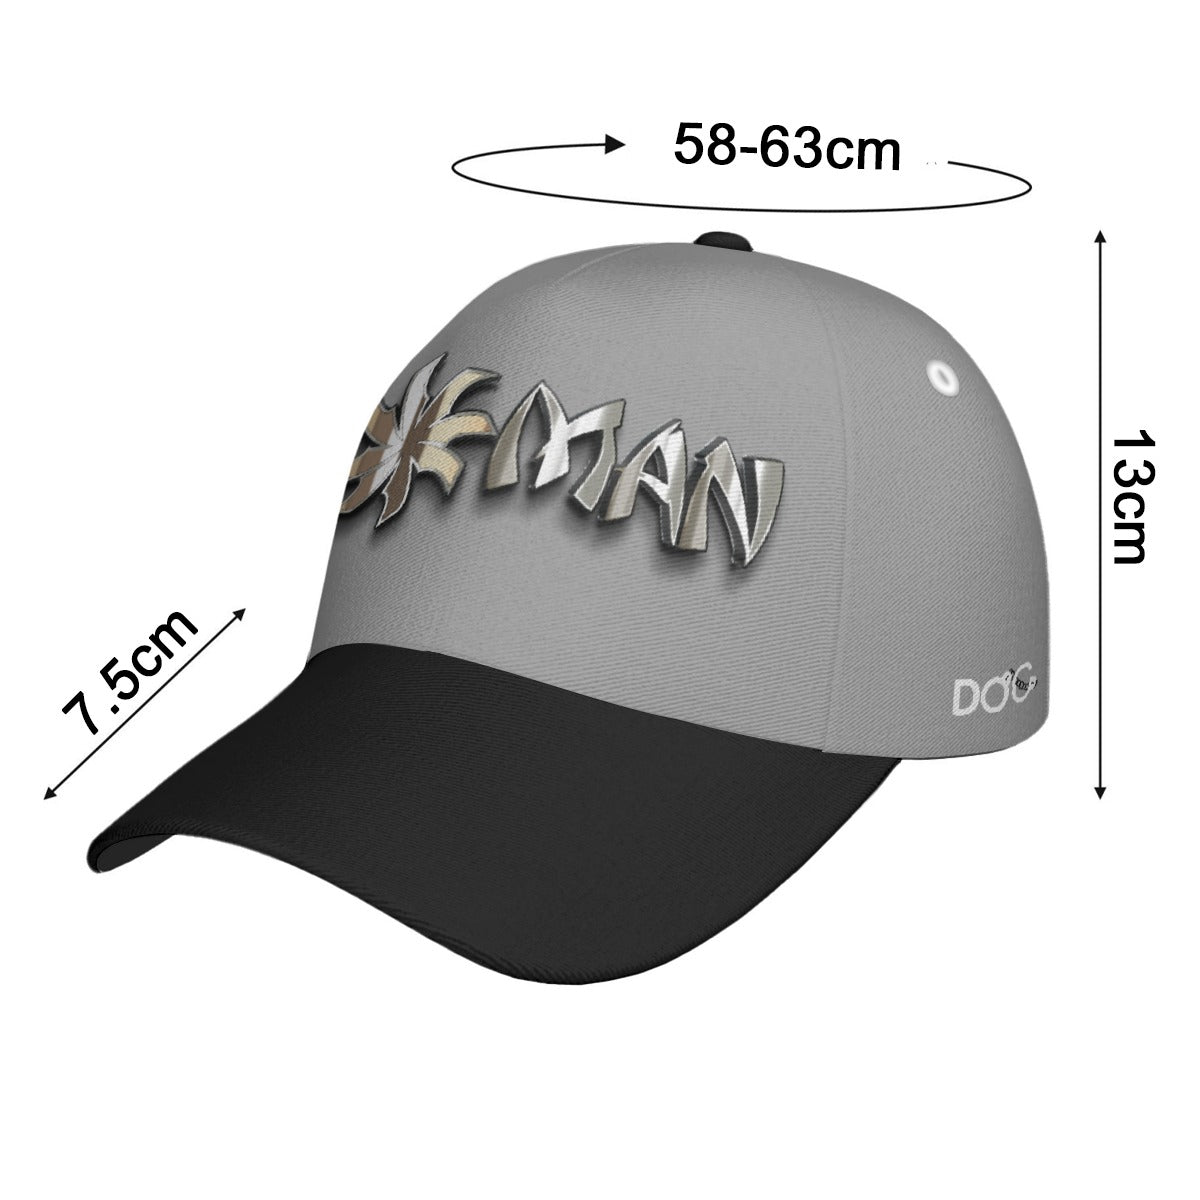 Taxxman Peaked Baseball Hat Cap